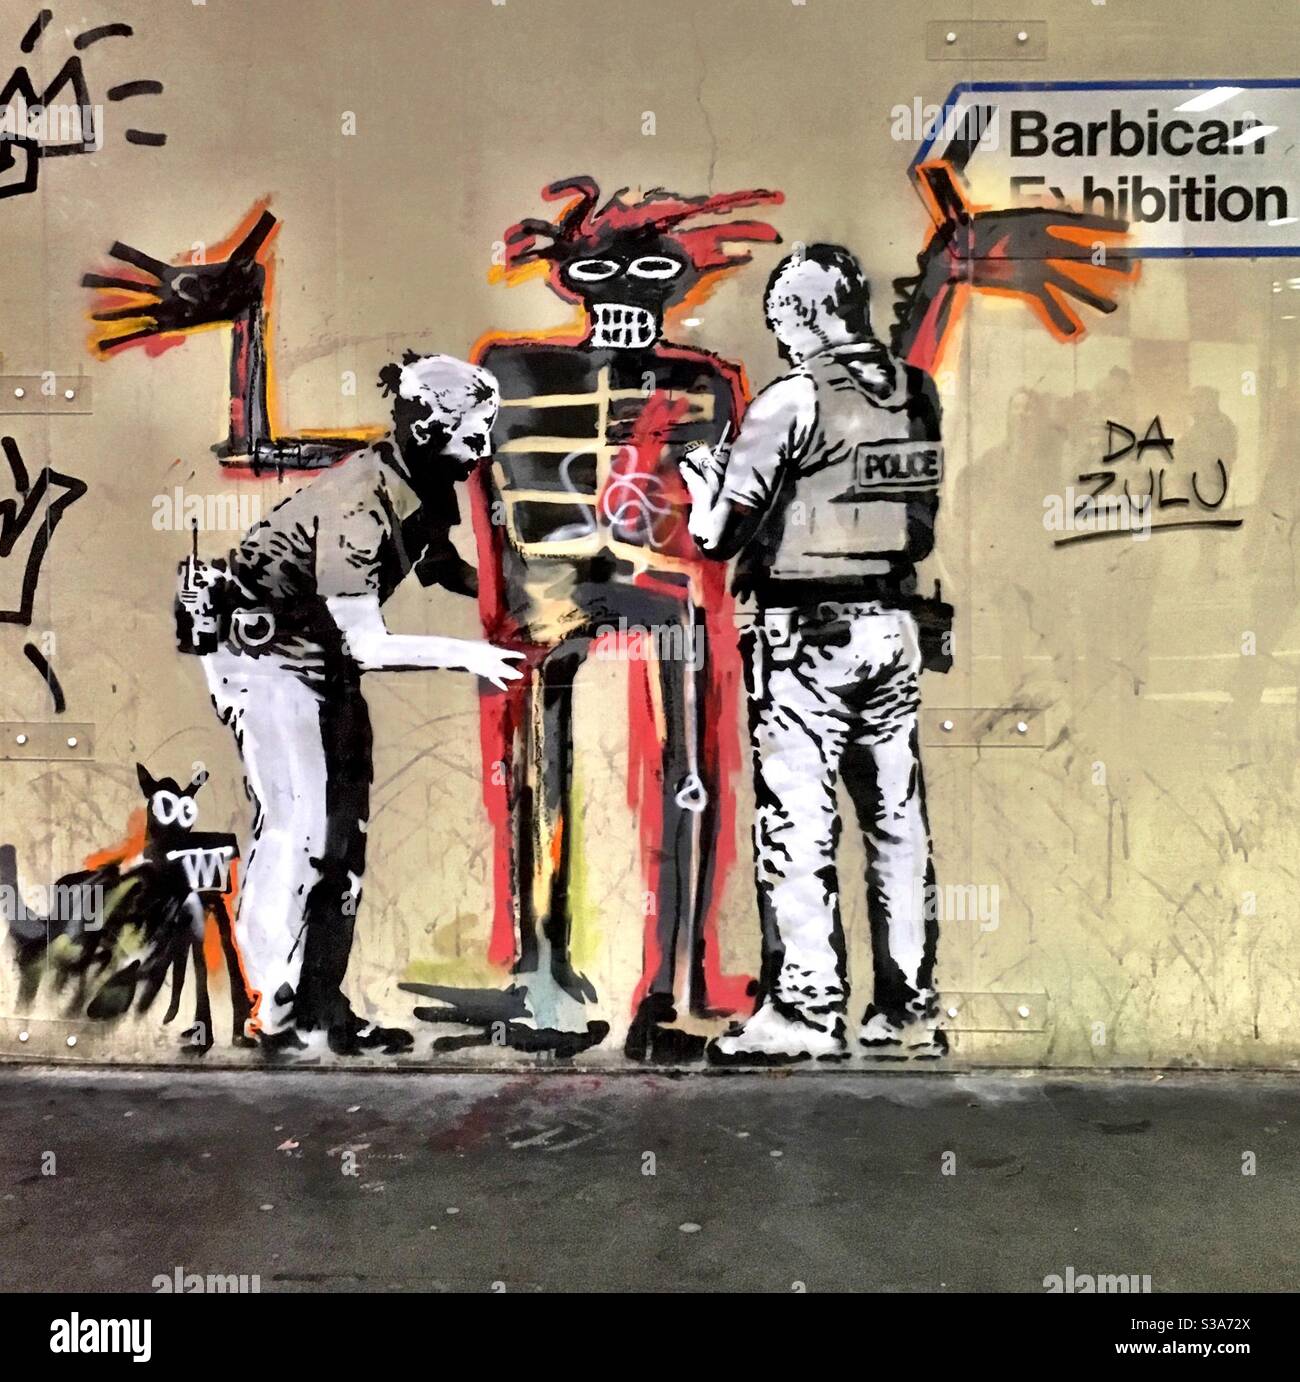 Banksy Street Art Graffiti auf Künstler Basquiat bei Barbican in London Stockfoto